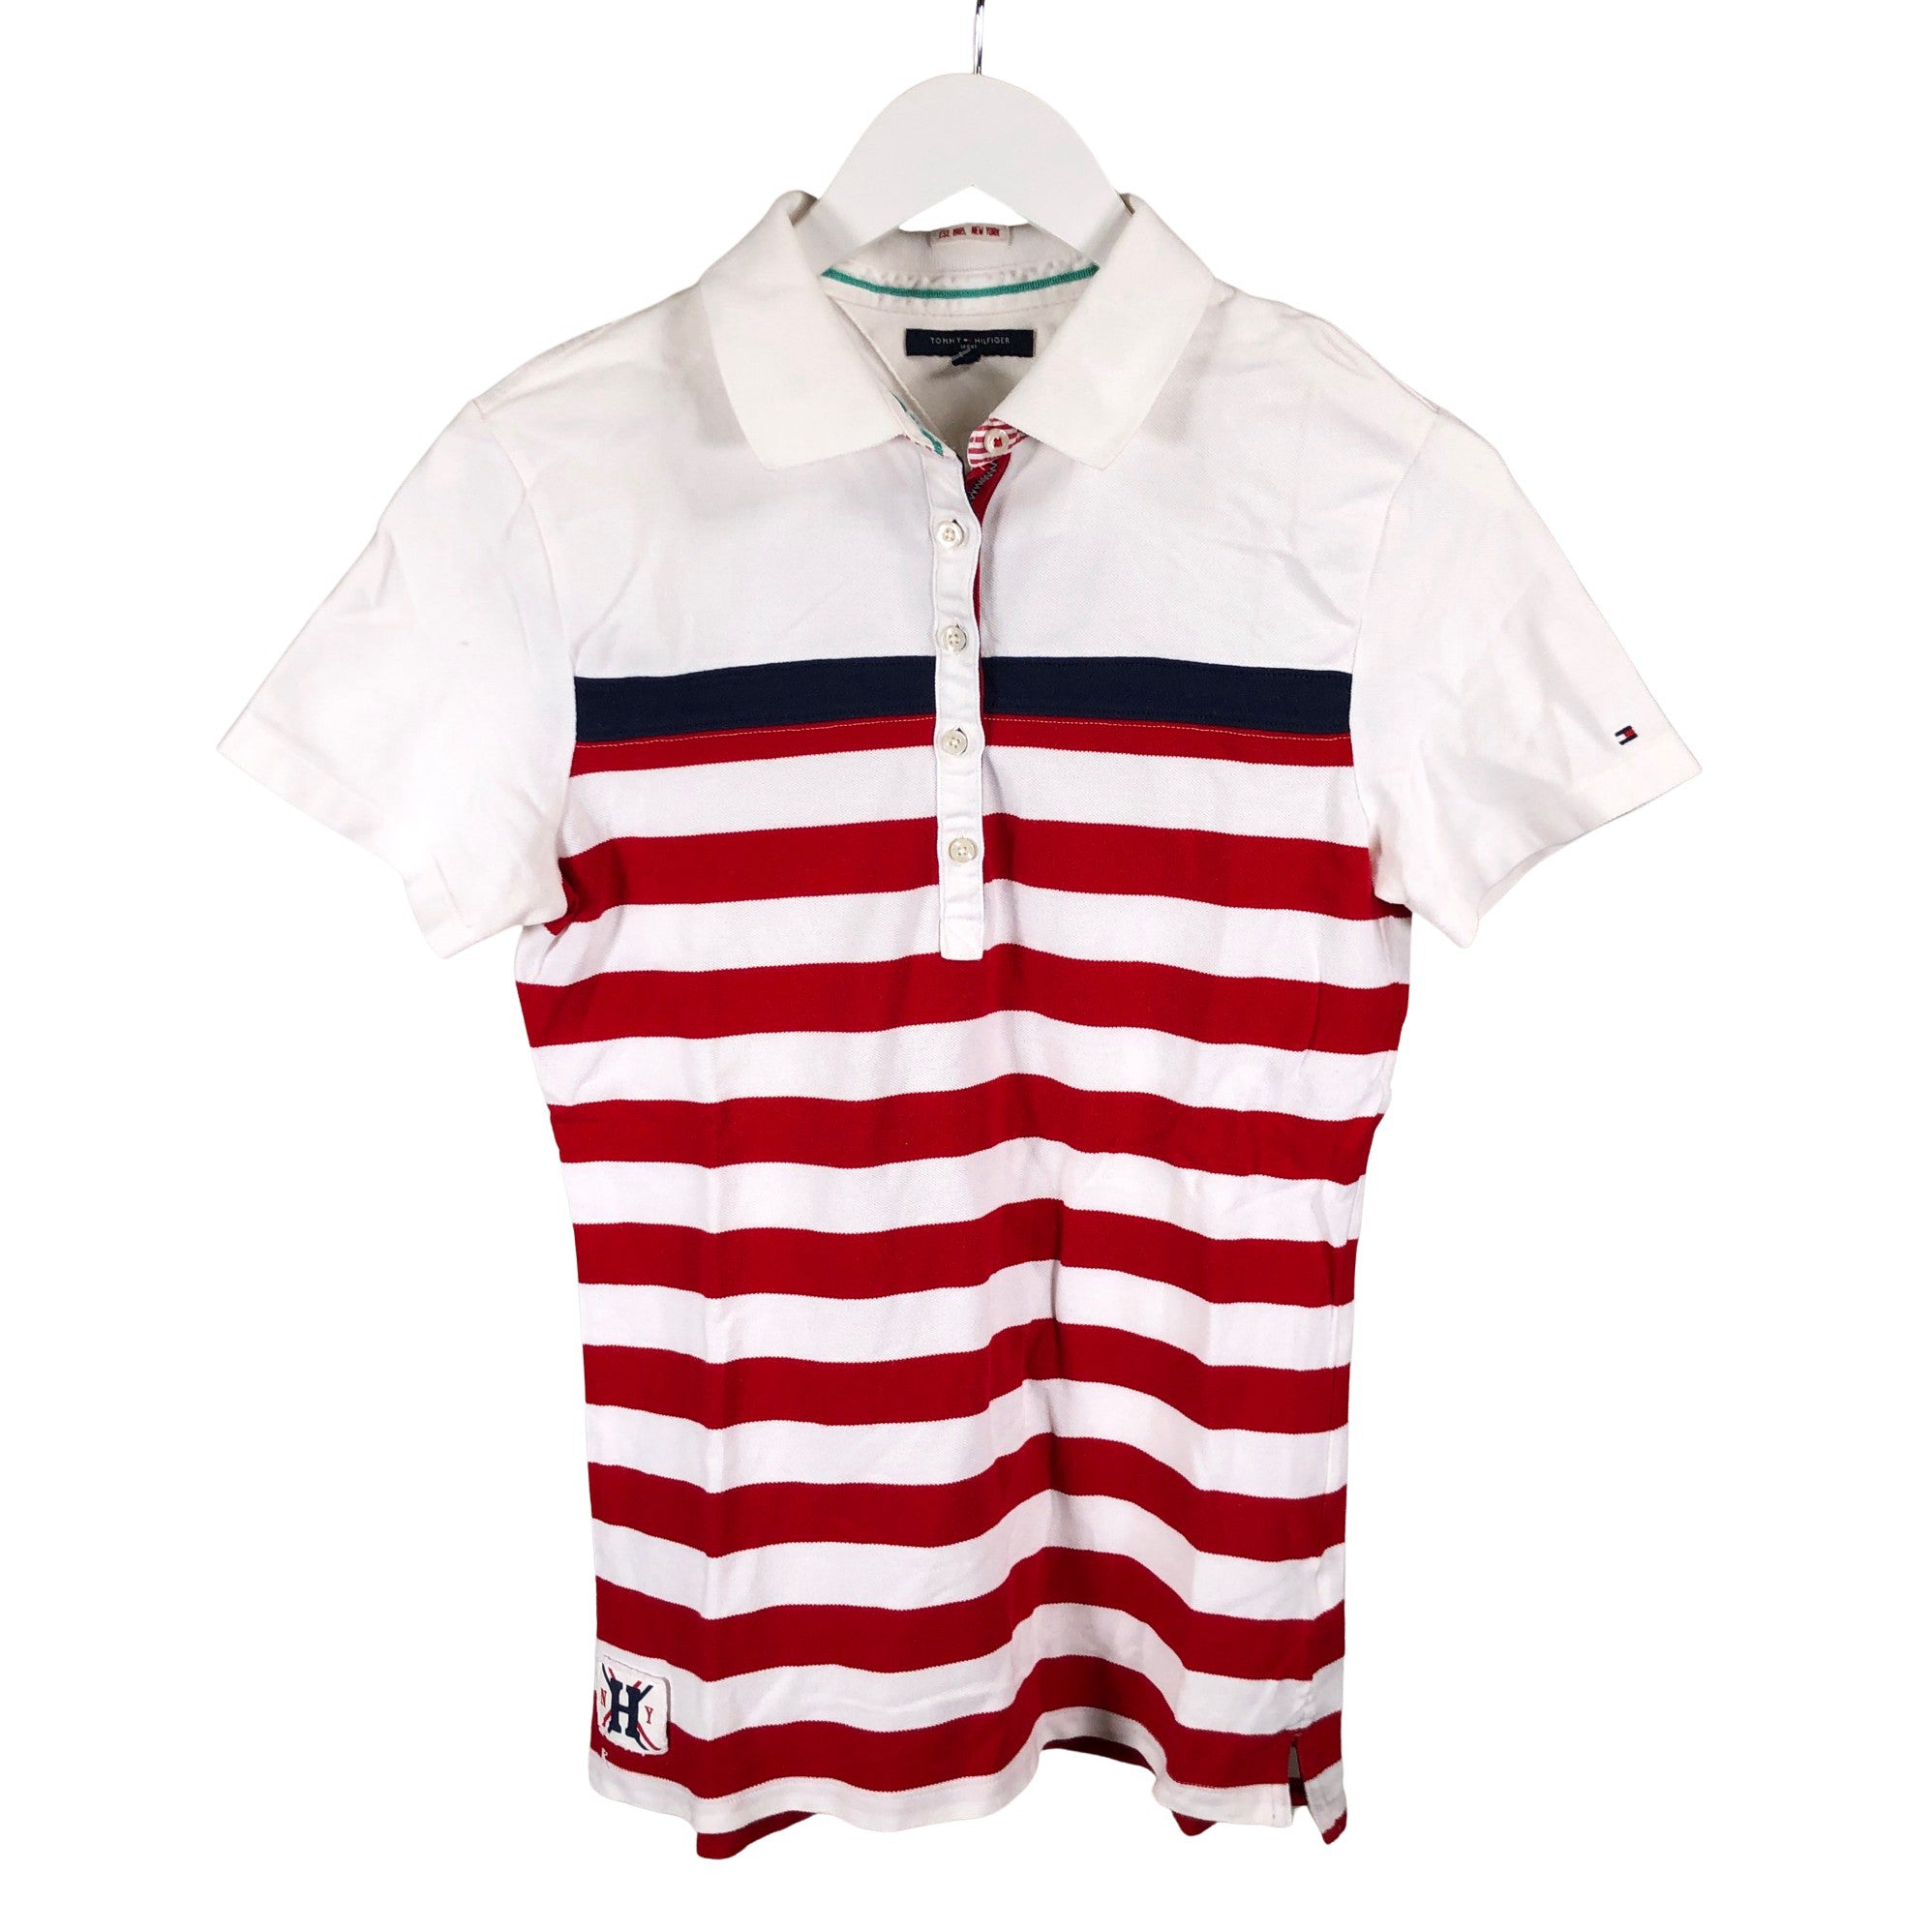 Women's Tommy Hilfiger Polo shirt, 38 (White)